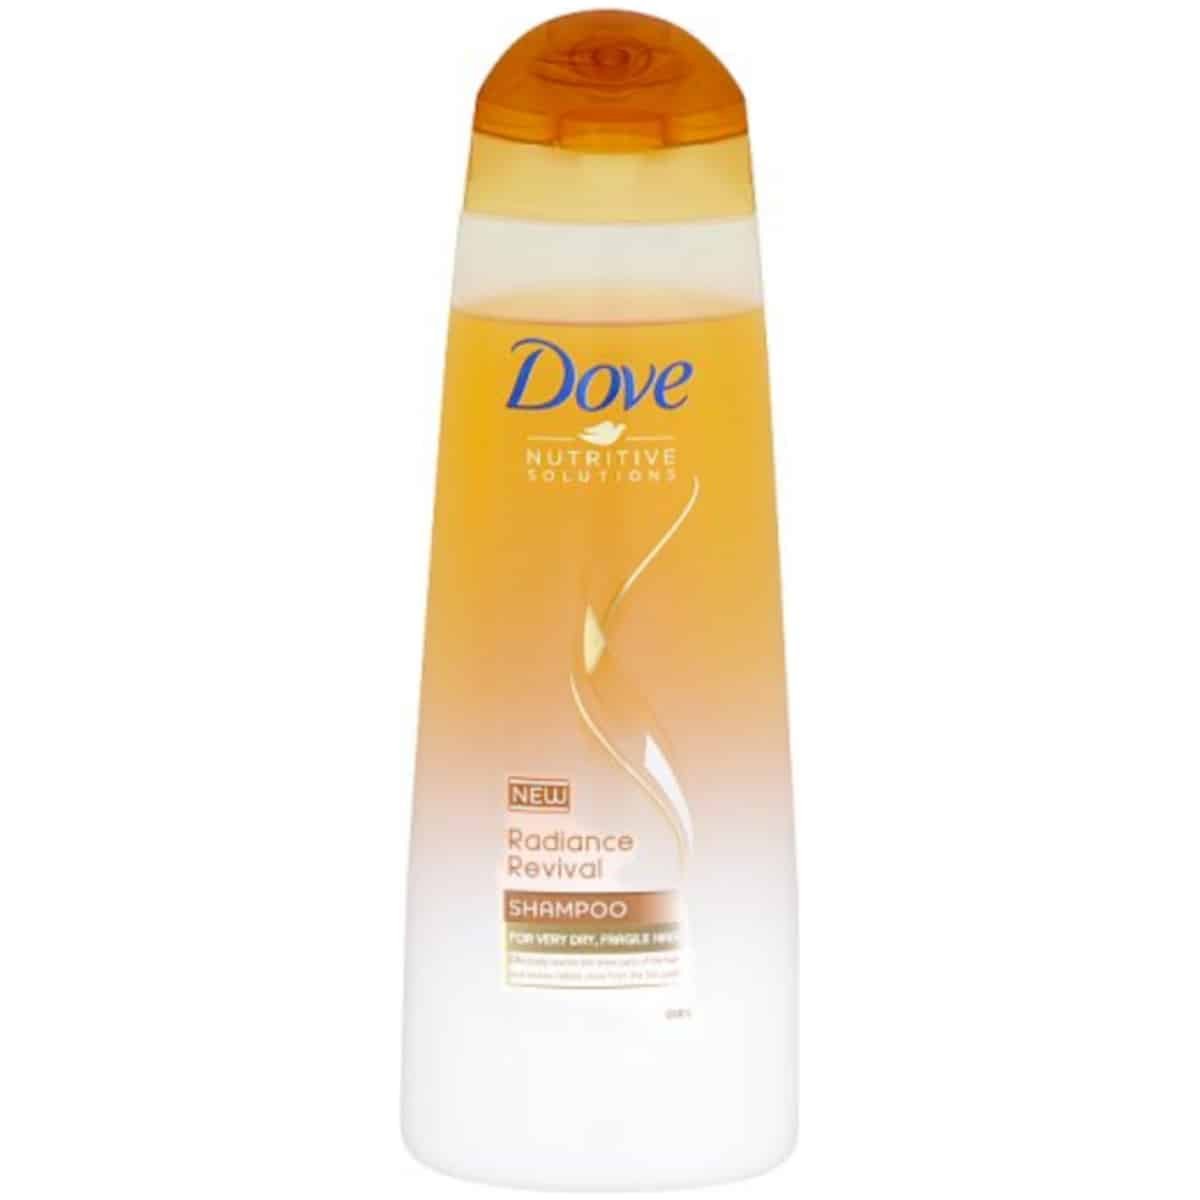 Dove Nutritive Solutions Radiance Revival Shampoo 400ml